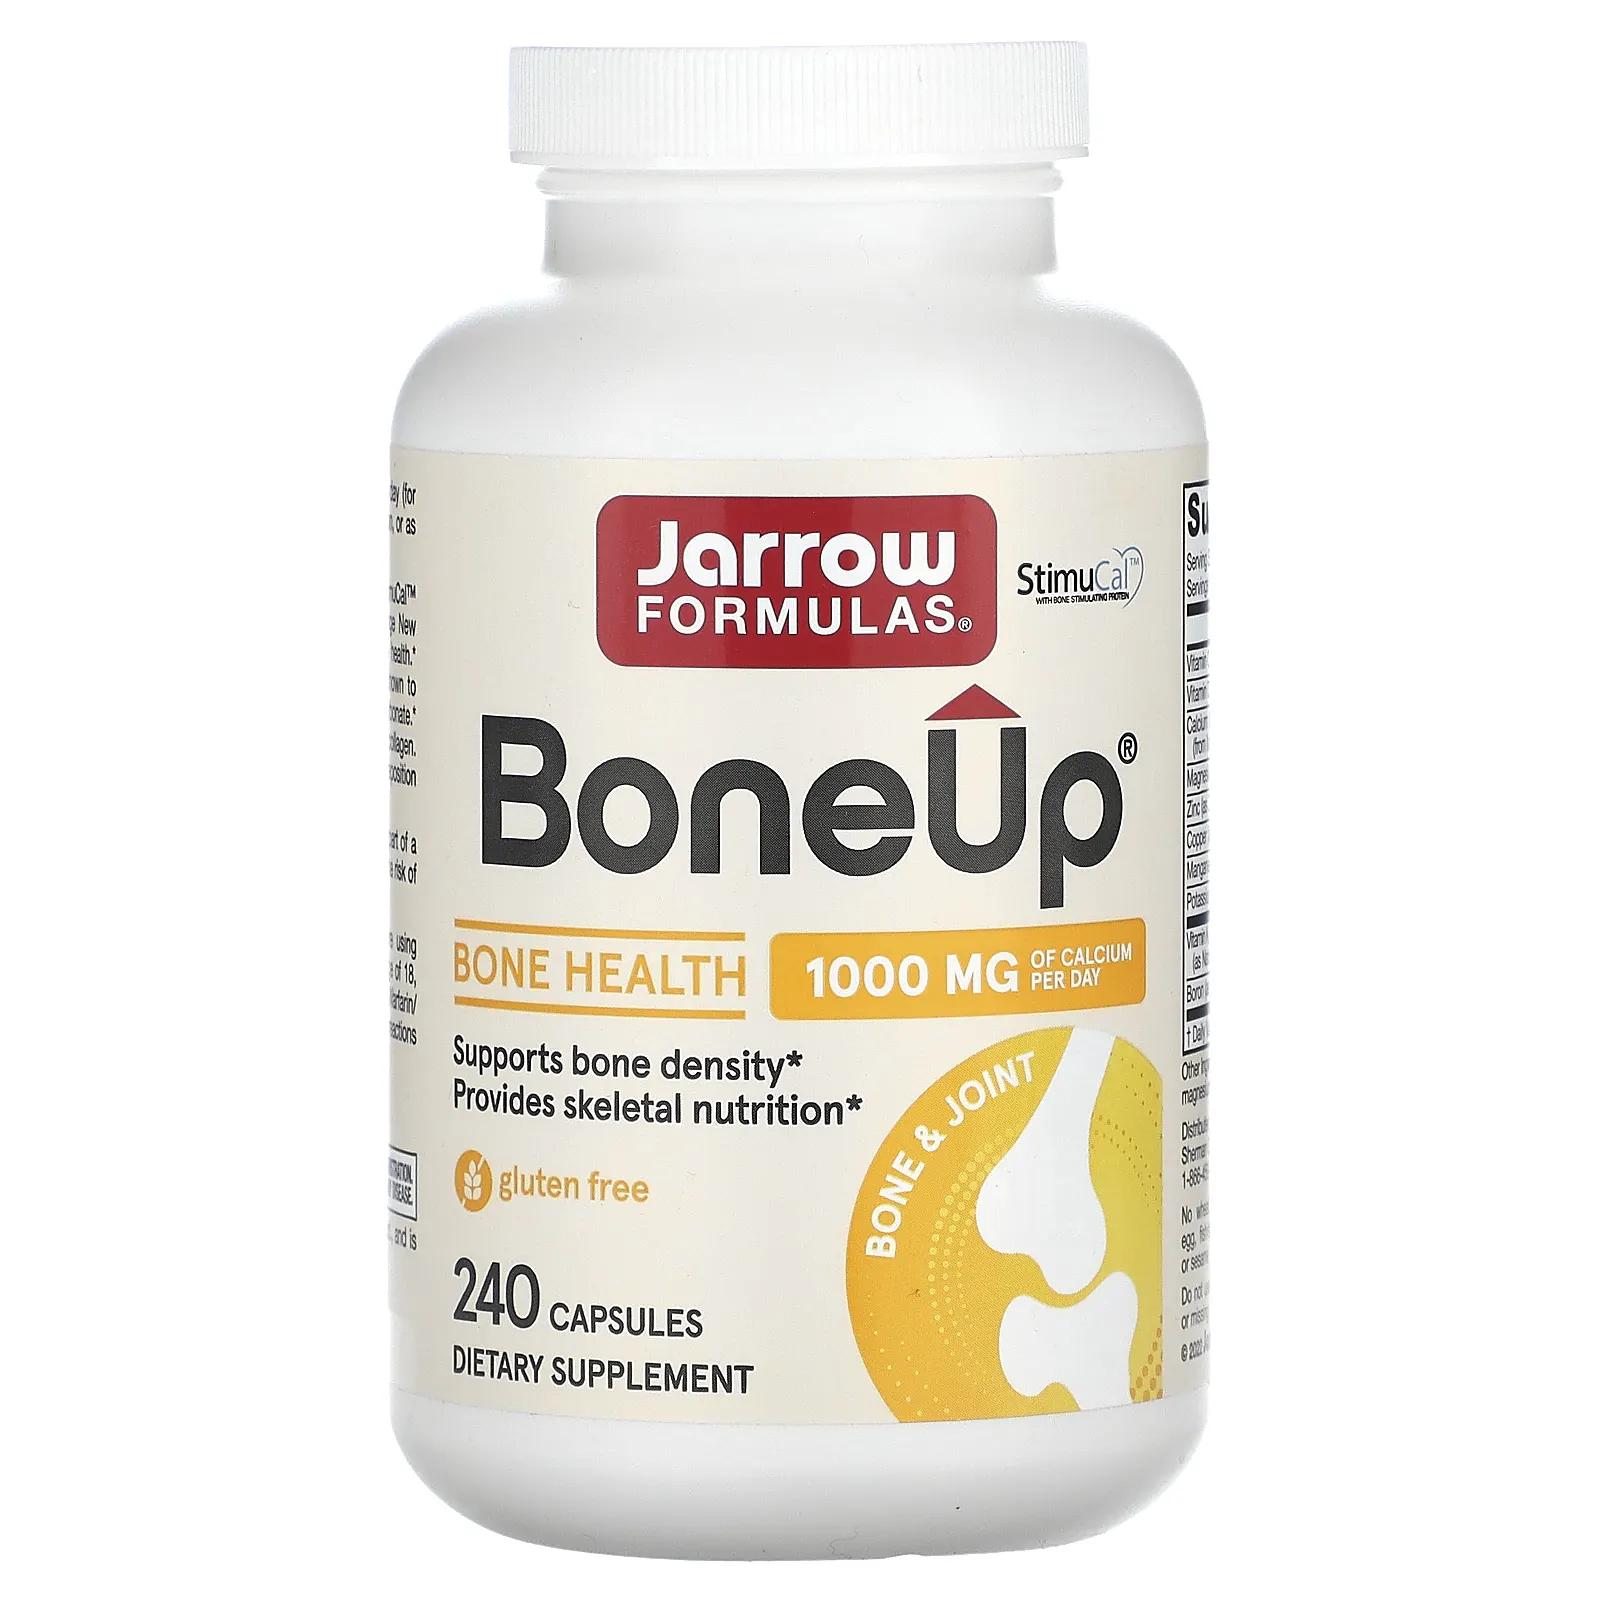 Jarrow Formulas Bone-Up усиленна формула кальция 240 капсул jarrow formulas ultra bone up добавка для укрепления костей 240 таблеток